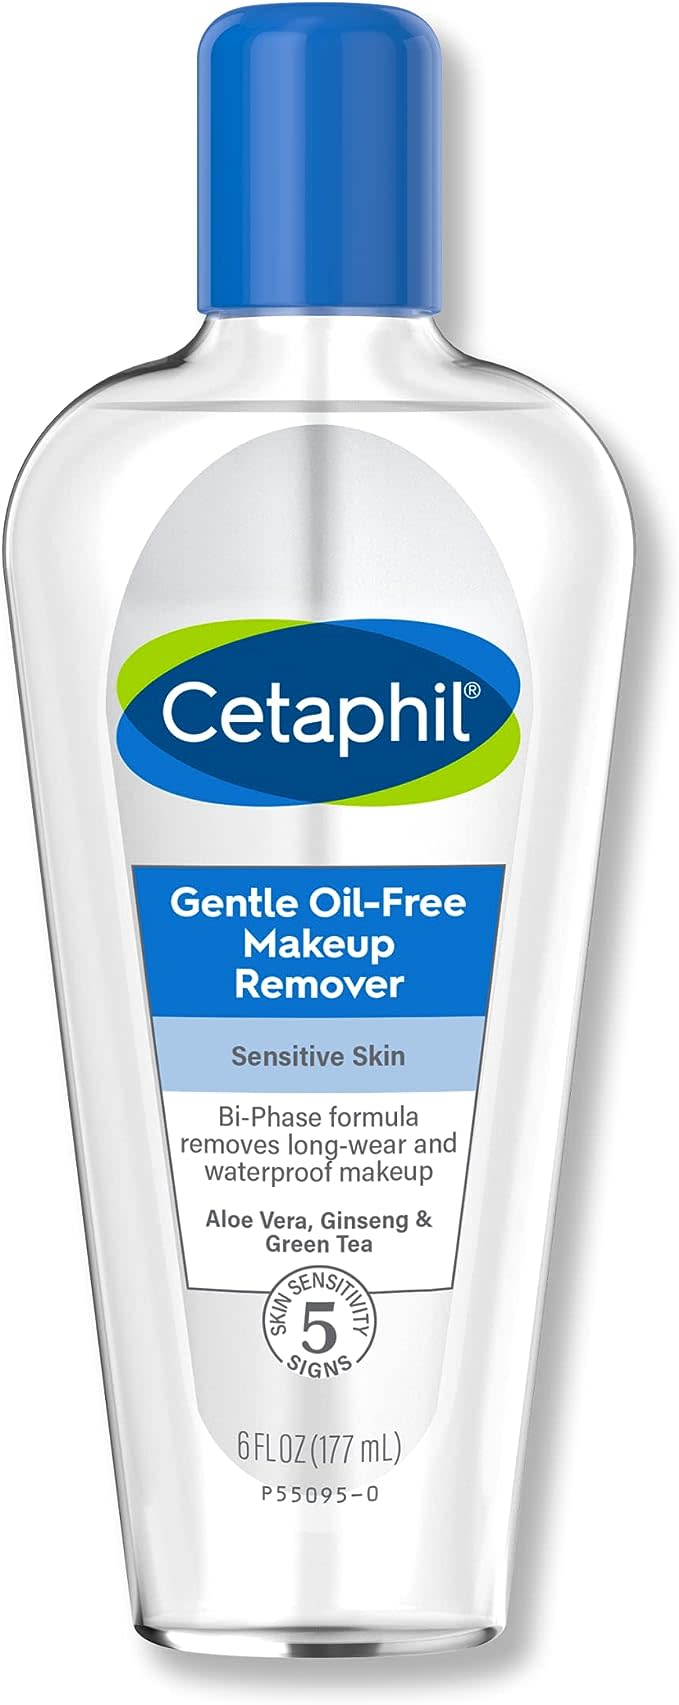 Cetaphil Gentle Waterproof Makeup Remover, Oil-Free Formula Suitable for Sensitive Skin, 177ml. PHOTO: Amazon